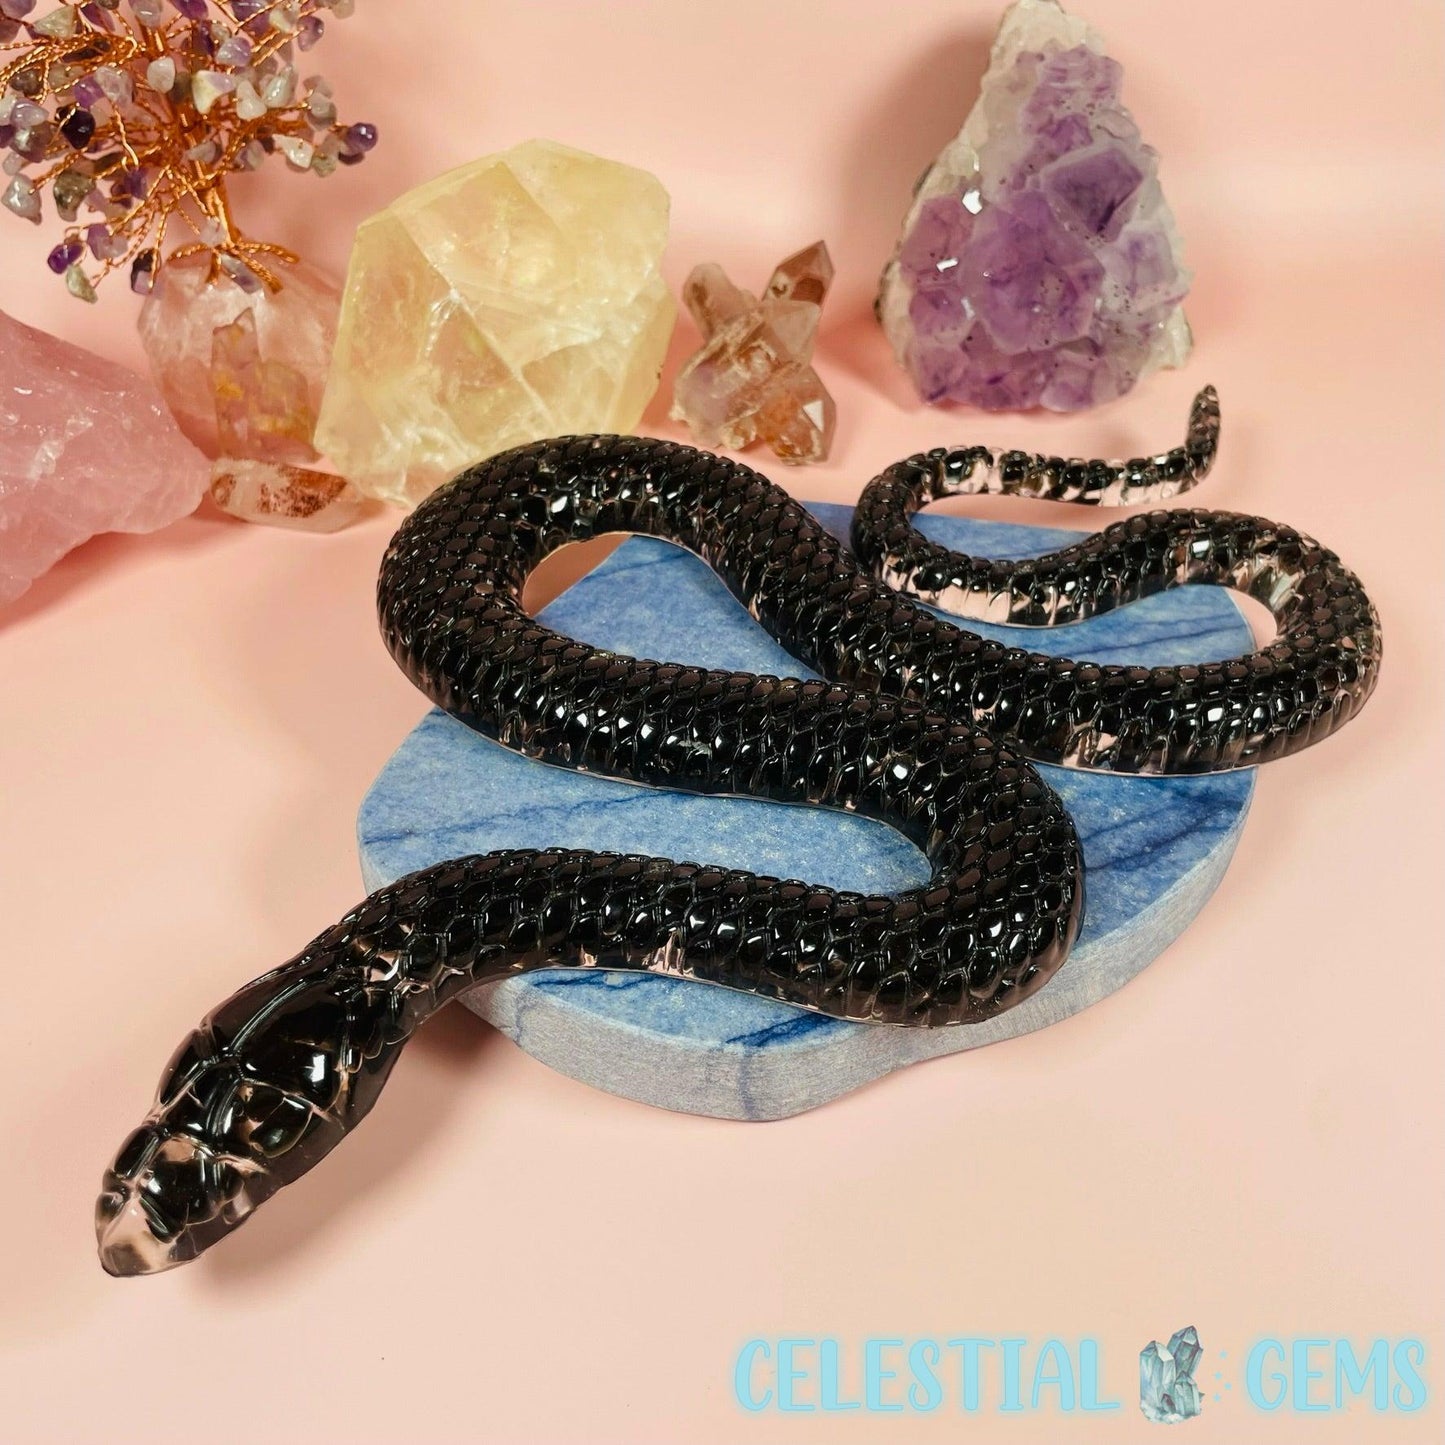 Obsidian Crystal Chip Resin Snake Large Carving